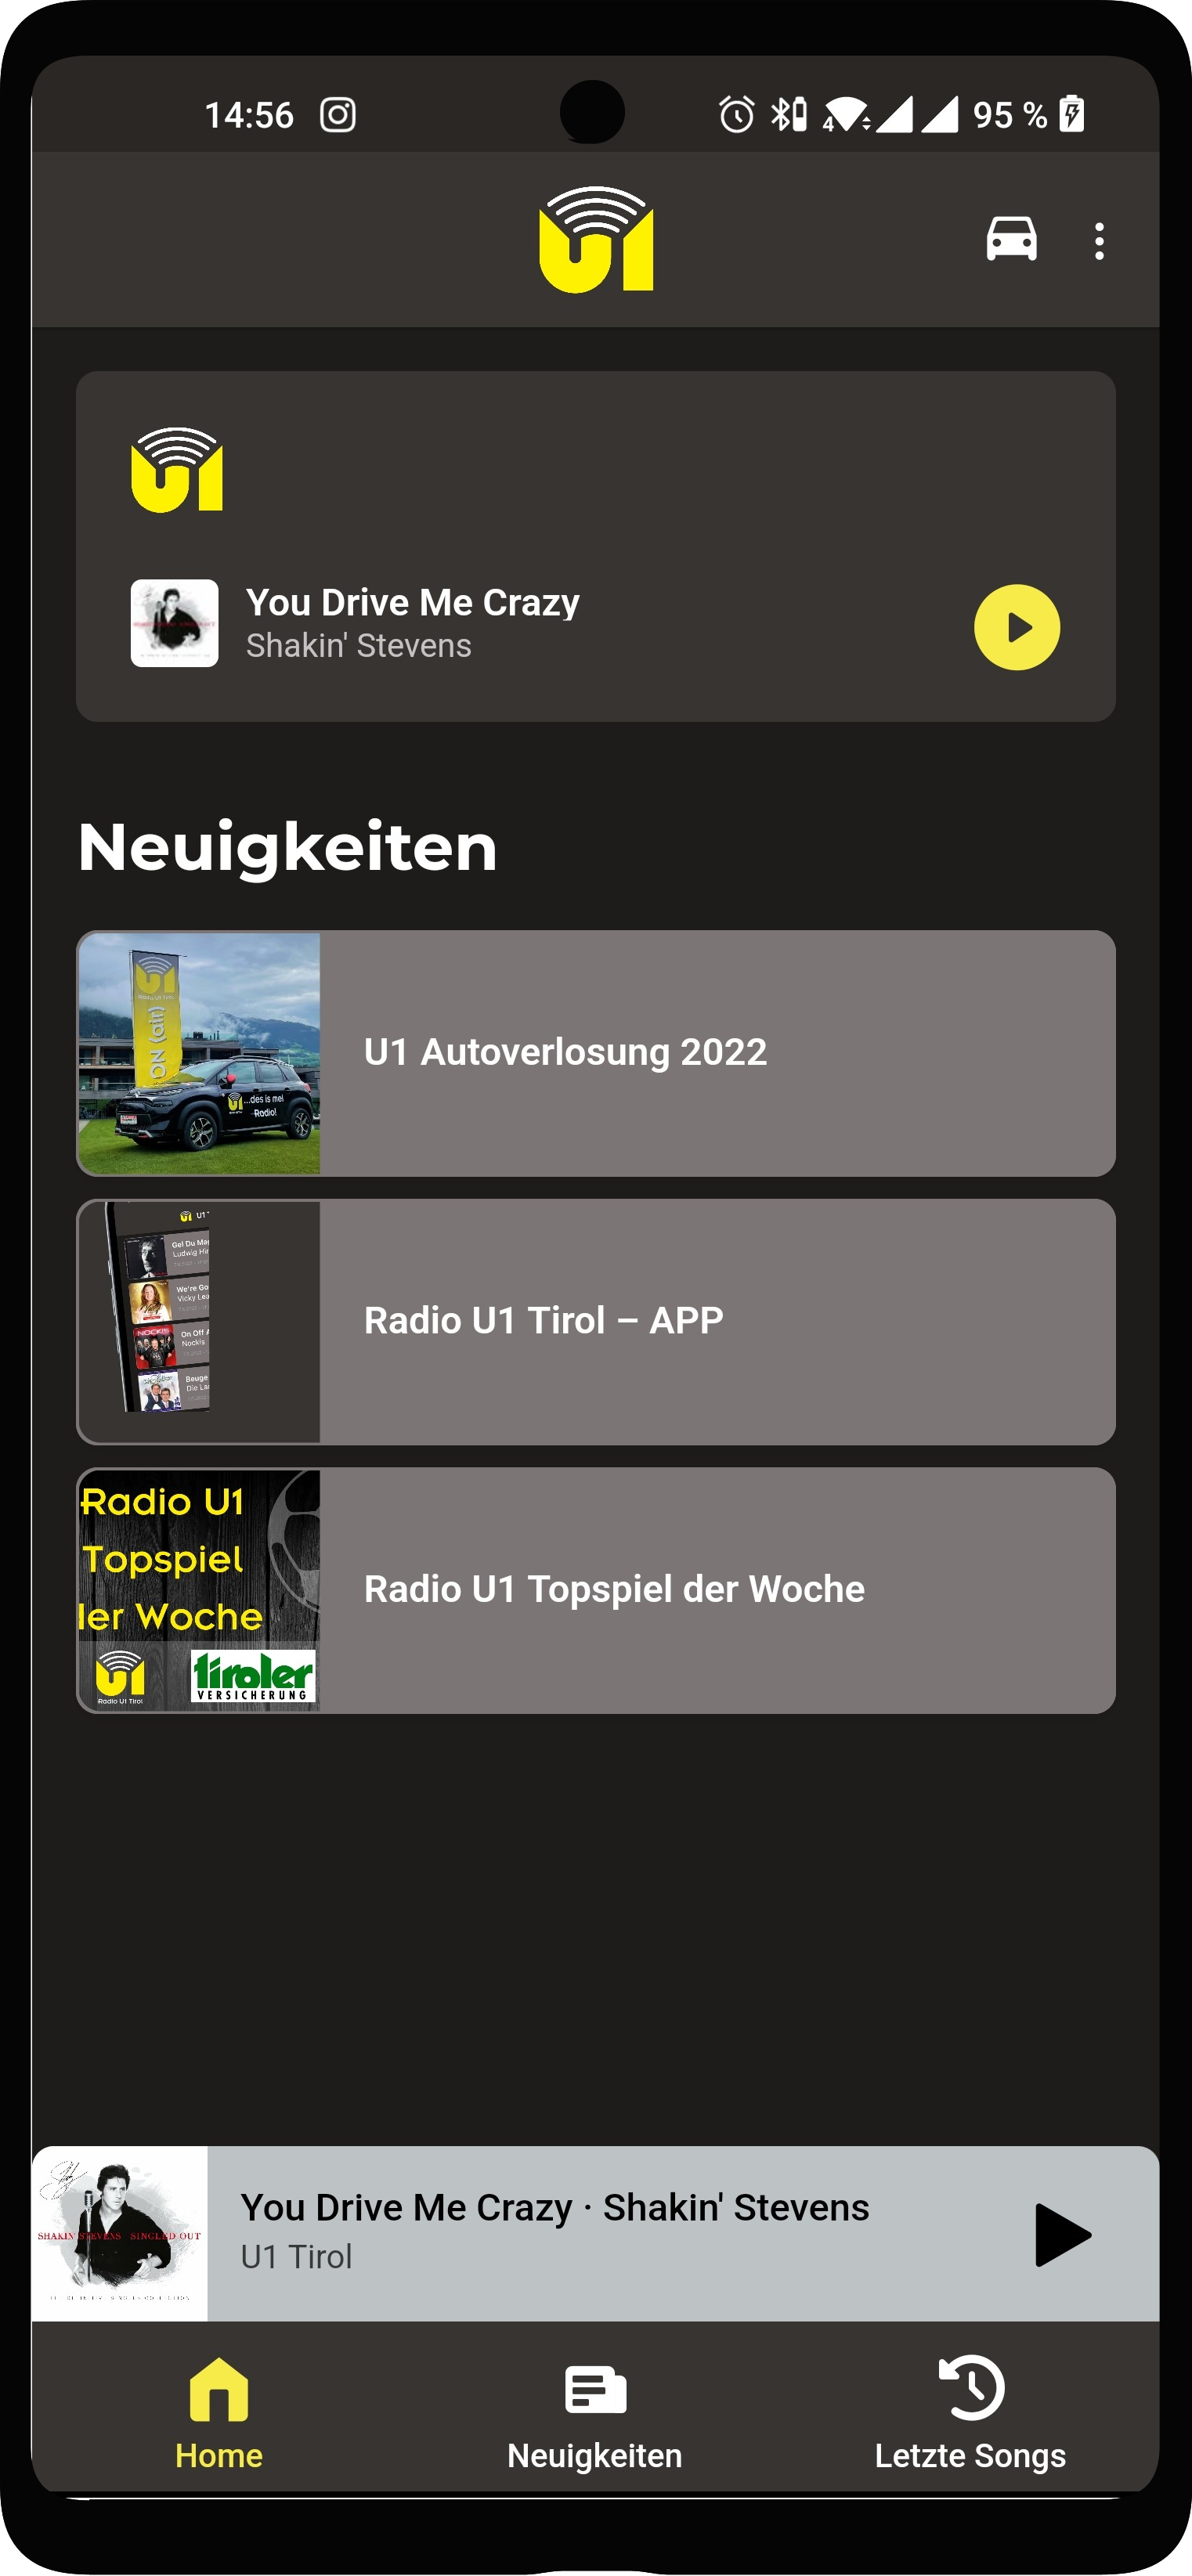 U1 Tirol App